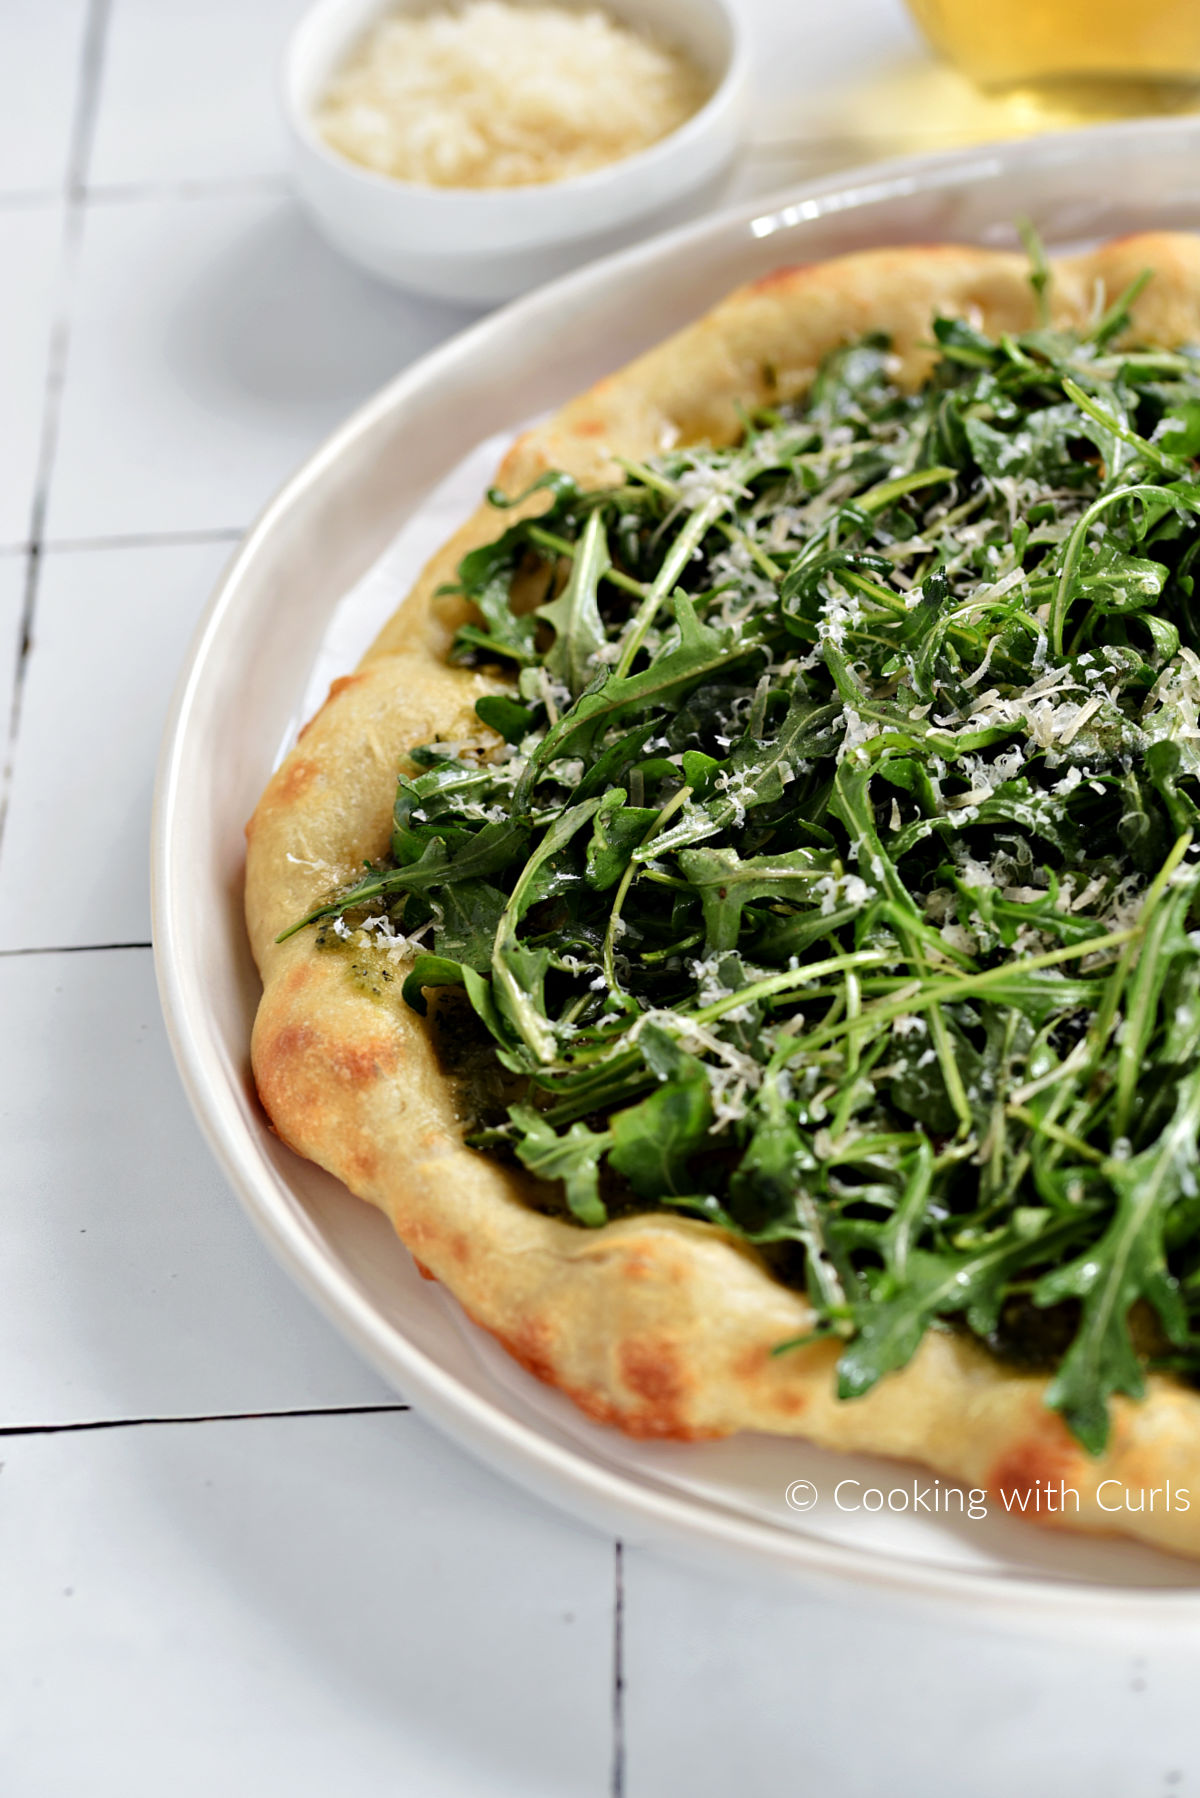 Greens Pizza Recipe with Italian crust, arugula, basil pesto, and grated parmesan cheese. 